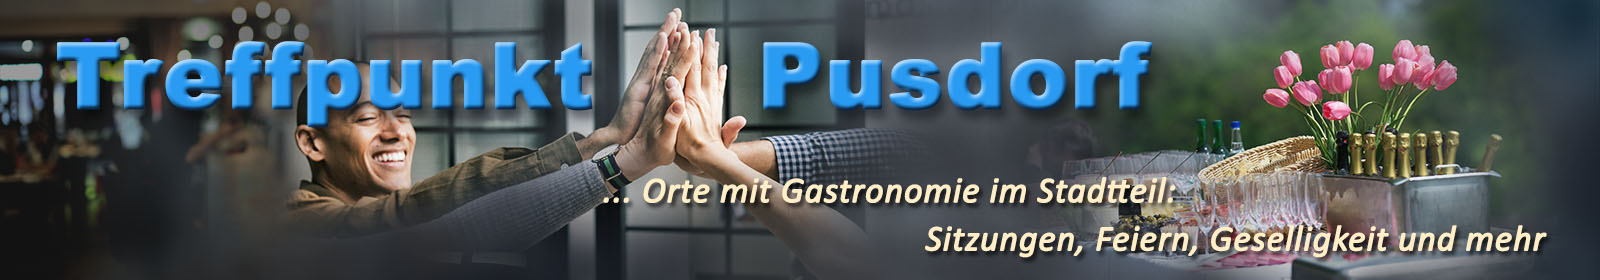 pusdorf.info – Das Justus im Tabakquartier